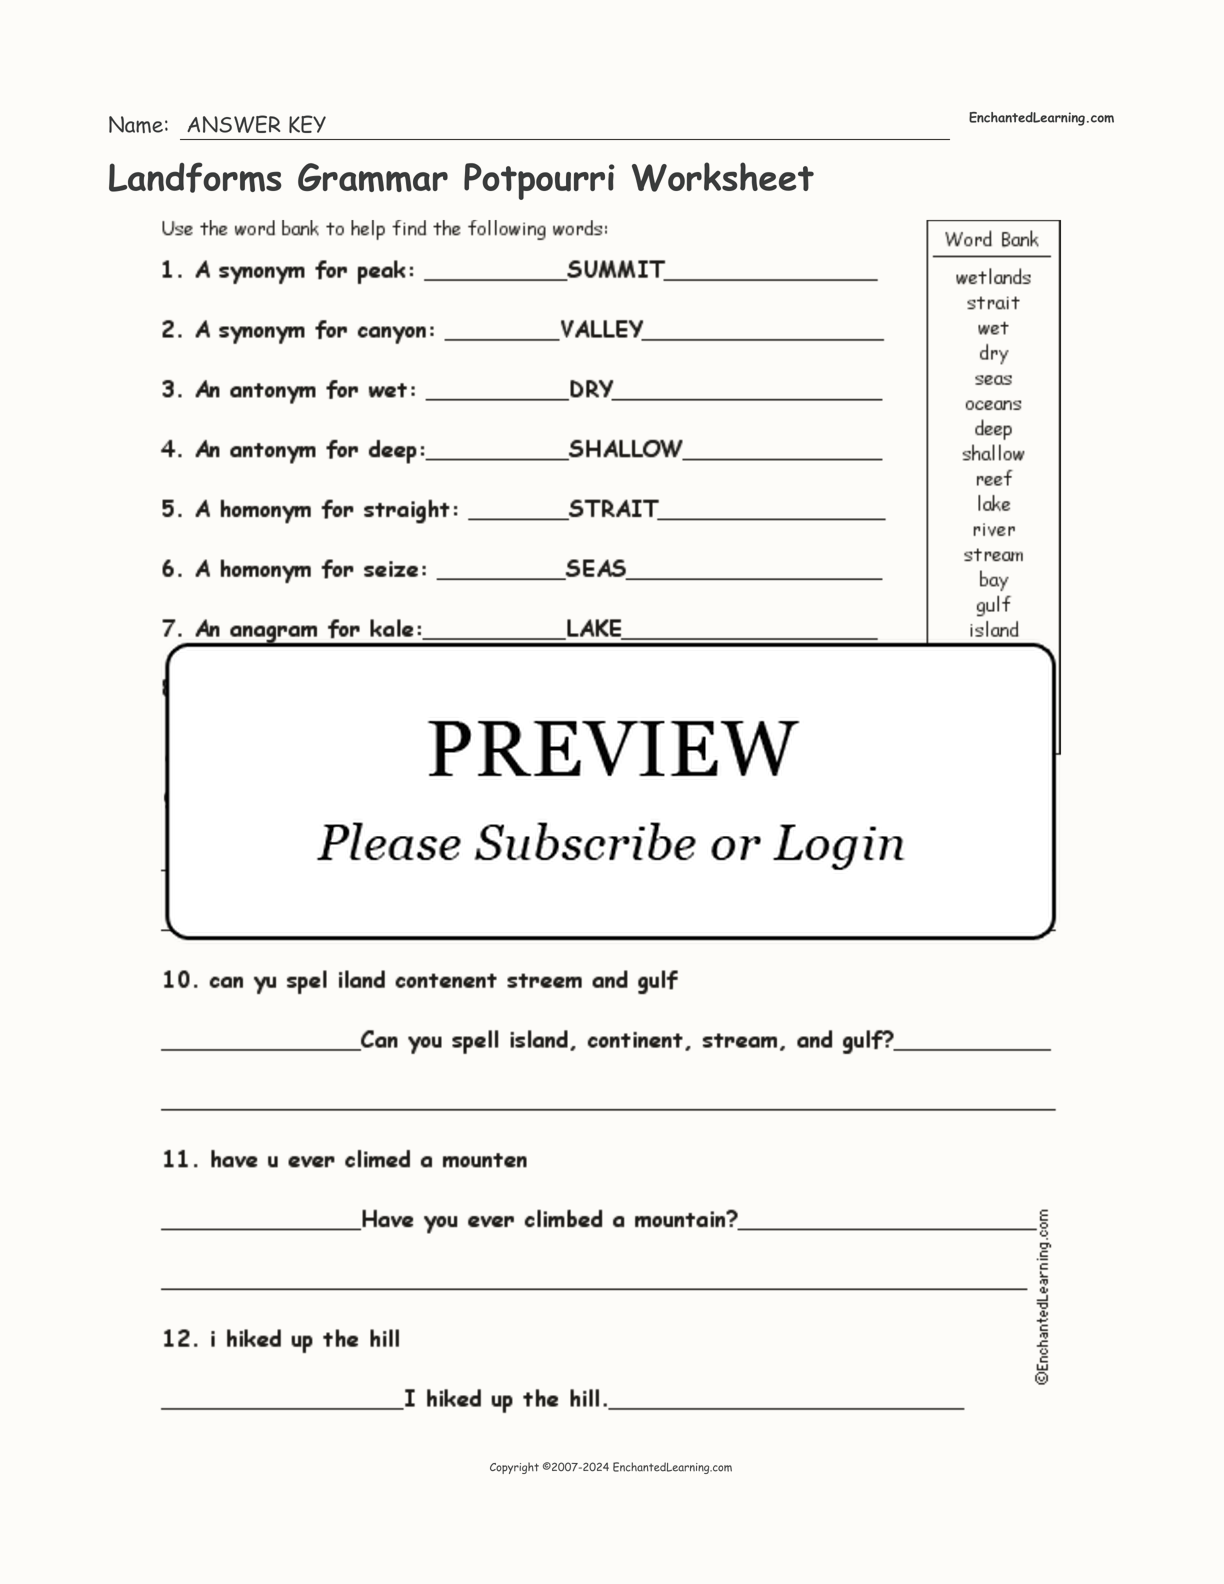 Landforms Grammar Potpourri Worksheet interactive worksheet page 2